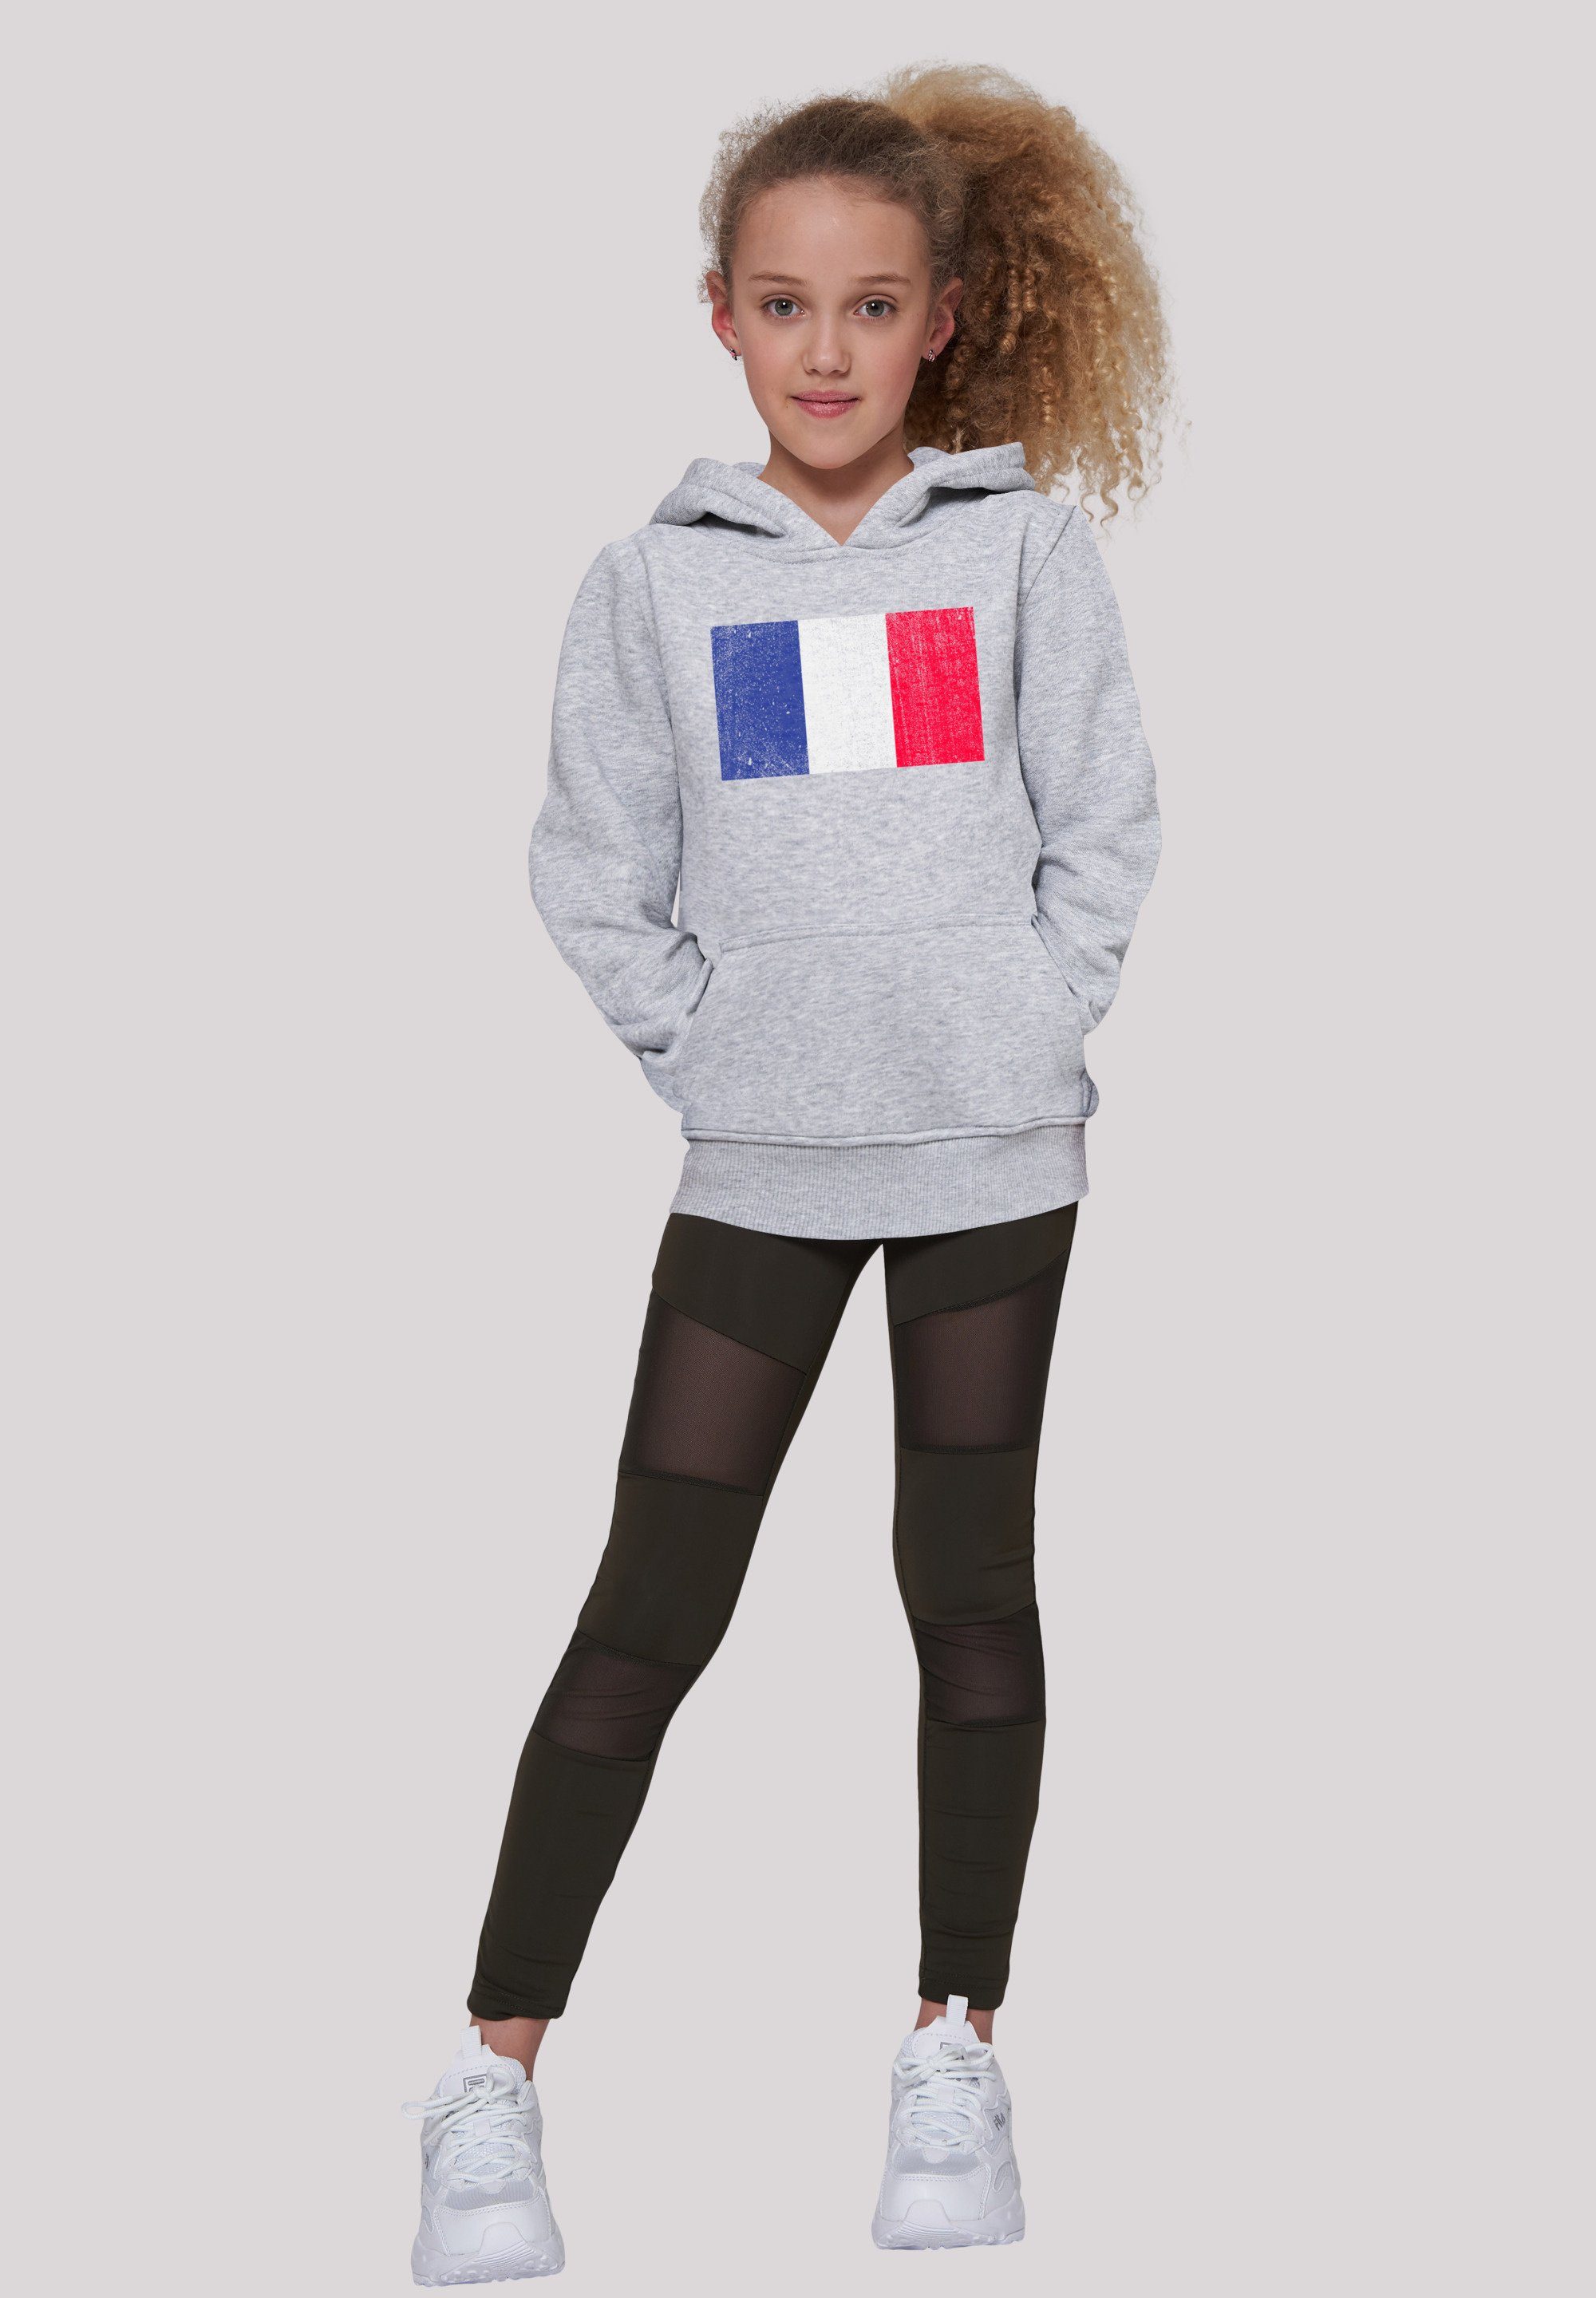 F4NT4STIC Kapuzenpullover France Frankreich Flagge Print grey distressed heather